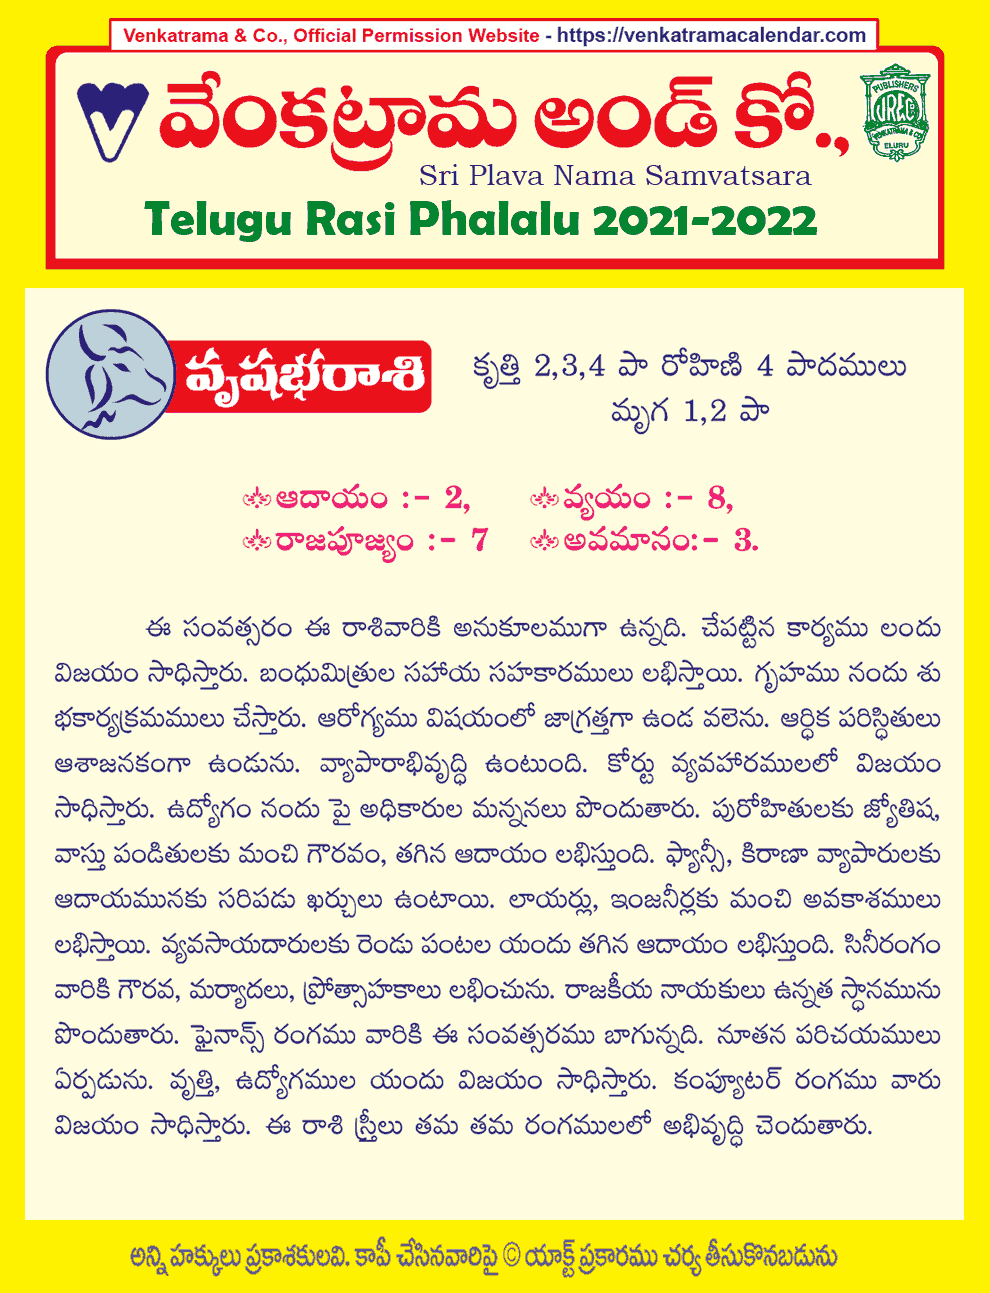 2021-2022-Rasi-Phalalu-Venkatrama-Co-Vrushabha.png